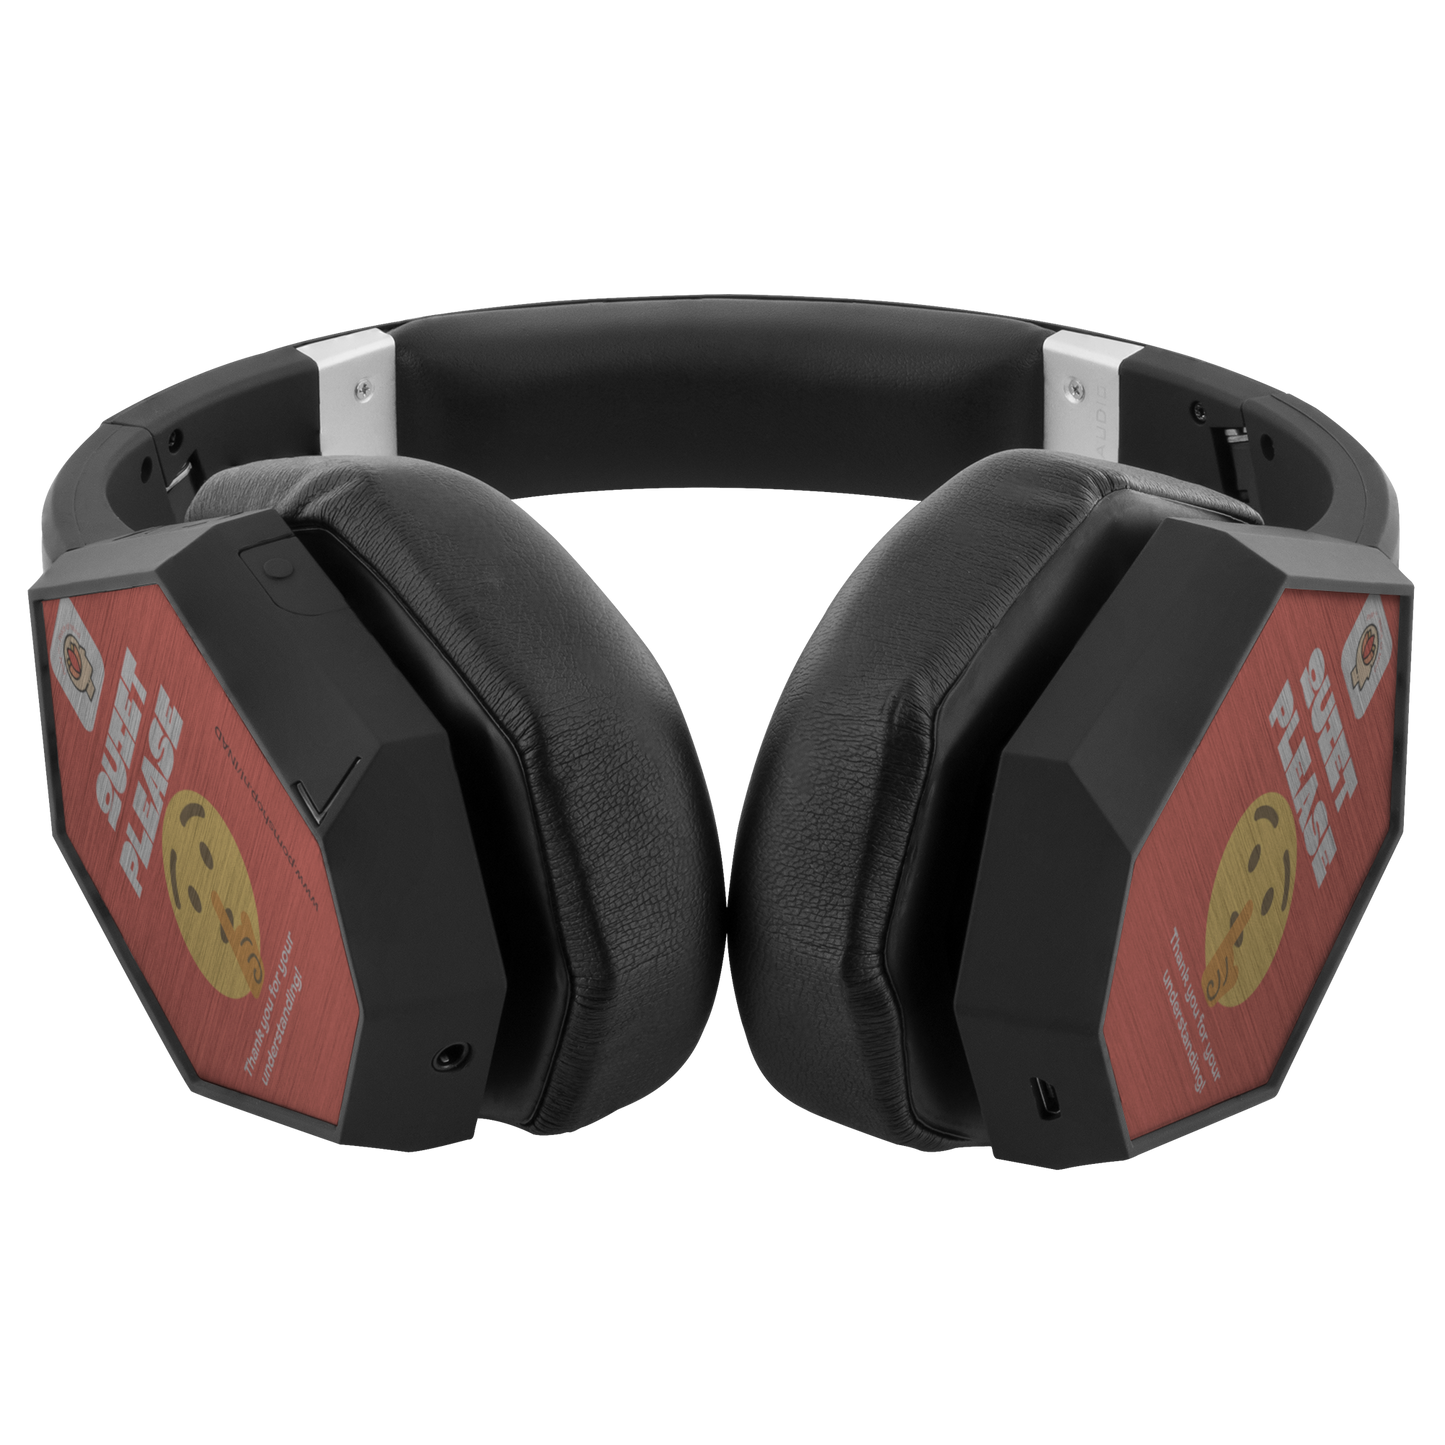 Bluetooth Headphones - Model Wrapsody (with mic, noise cancellation, print: Quiet Please)